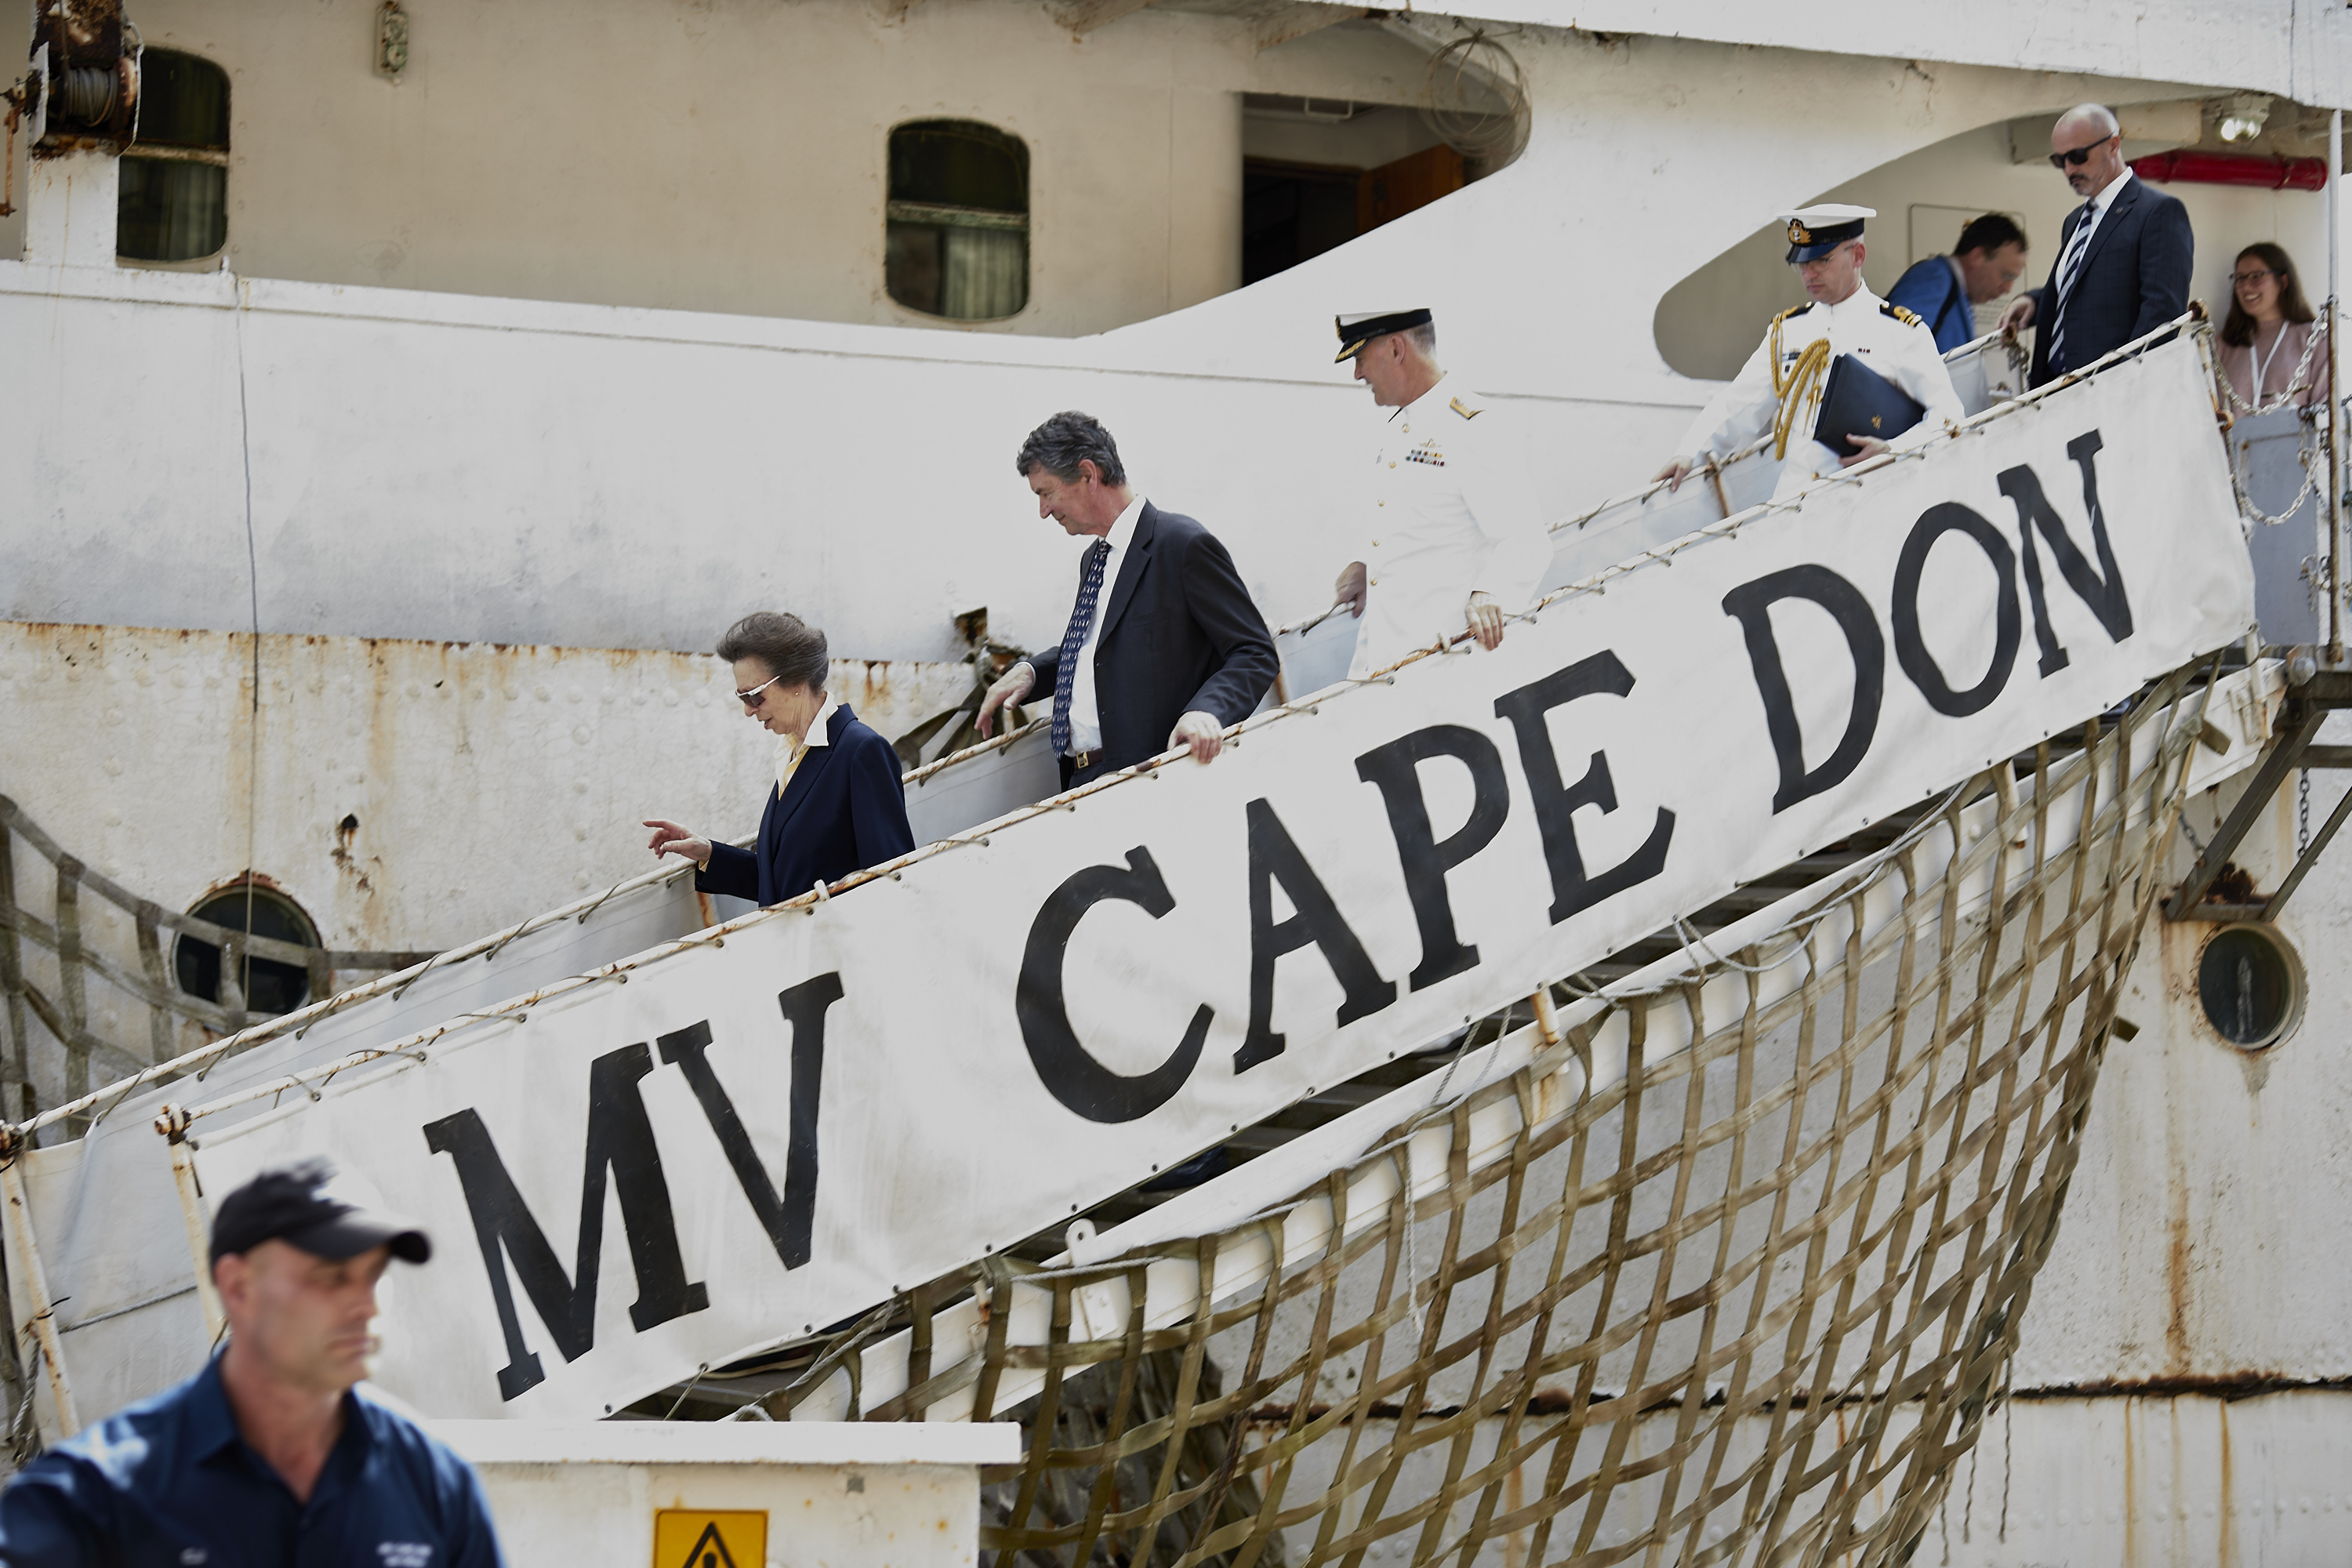 The Princess Royal arrives on MV Cape Don